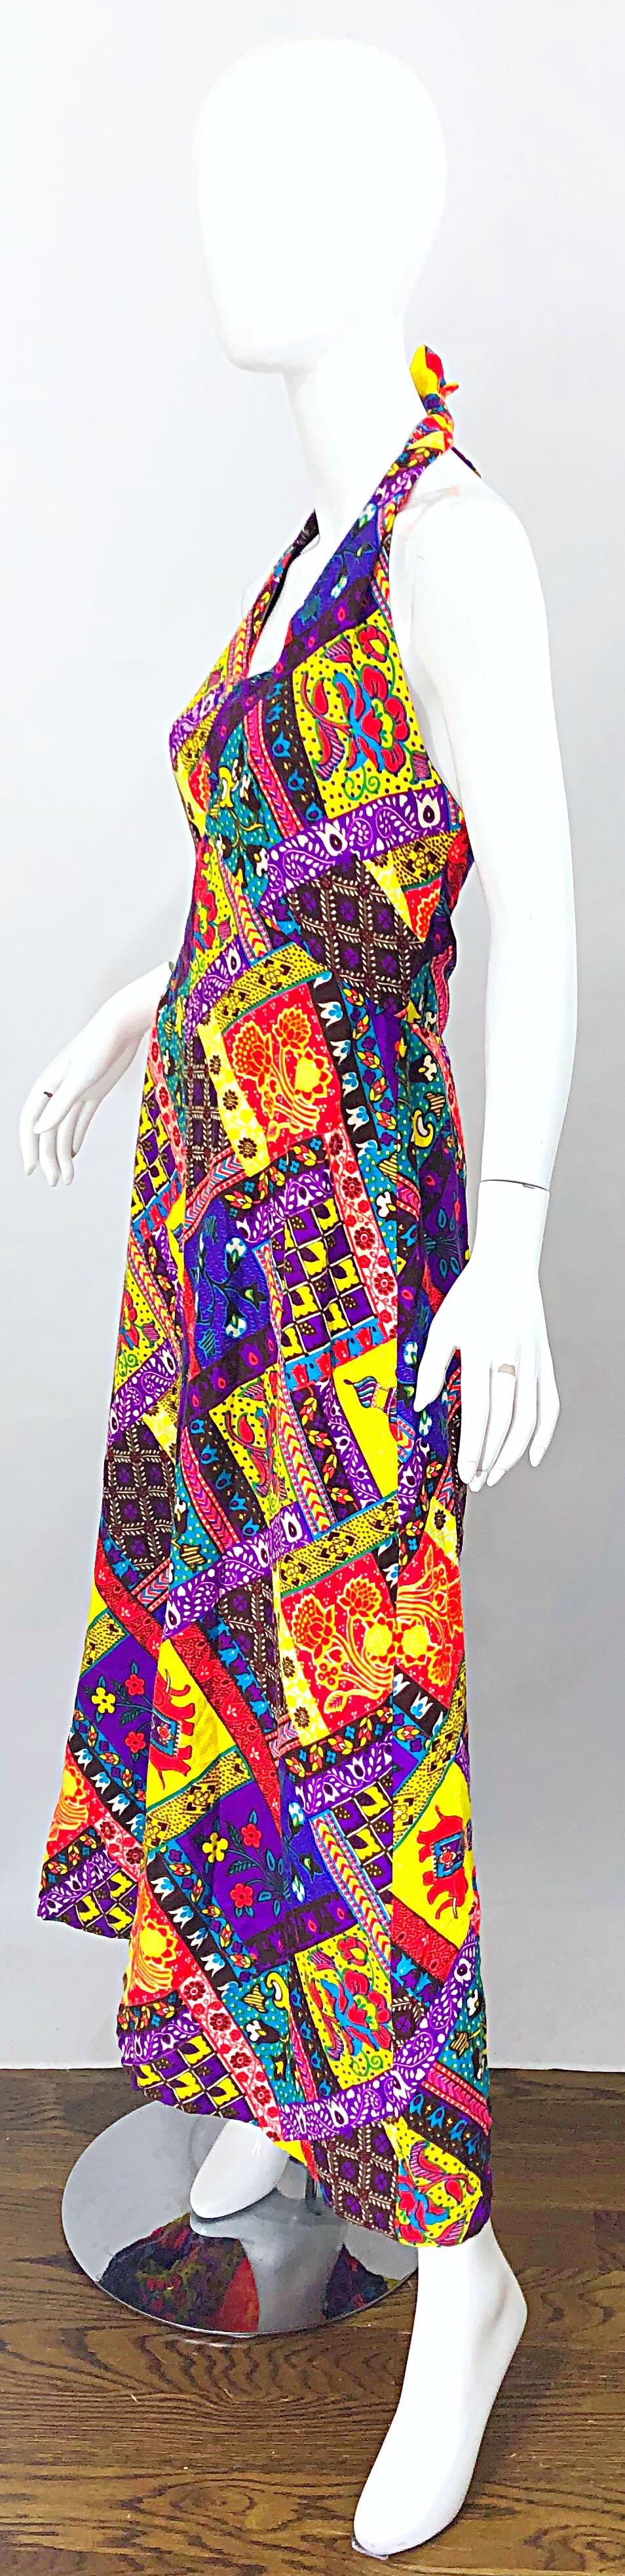 1970s print dress